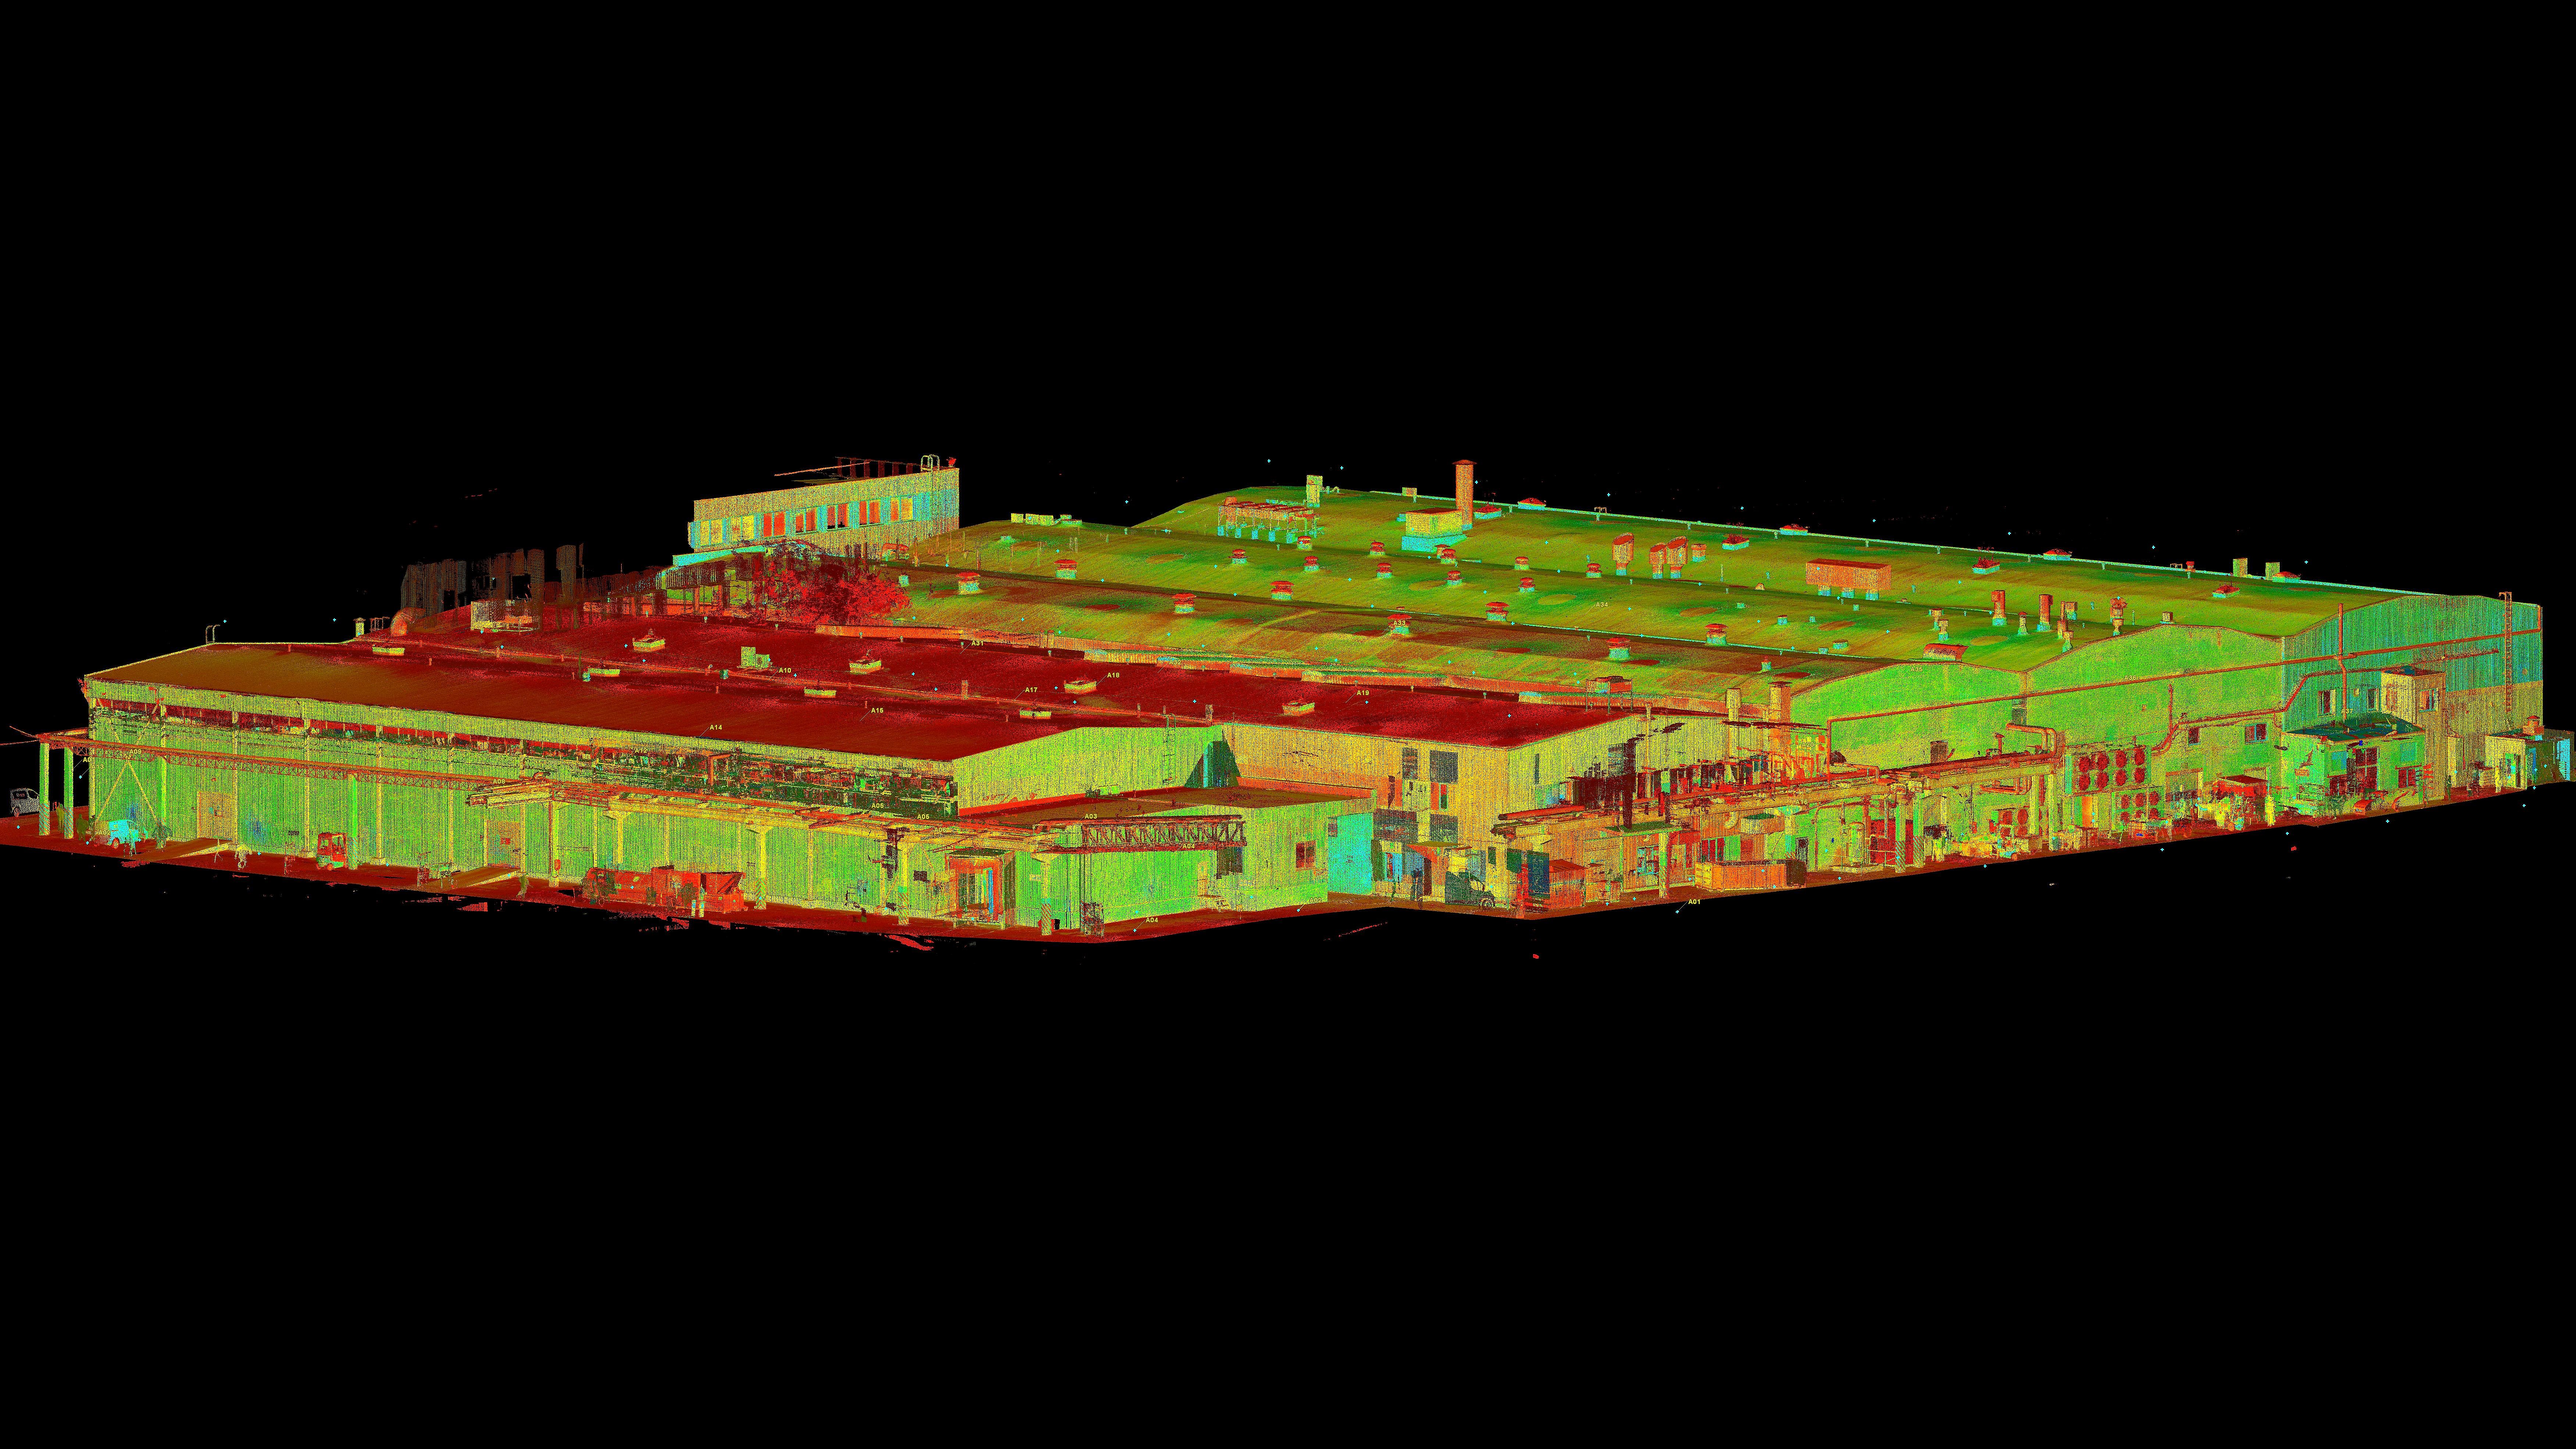 Laser scanning of the industrial buildings of Norma factory in Laki 14 Tallinn, Estonia